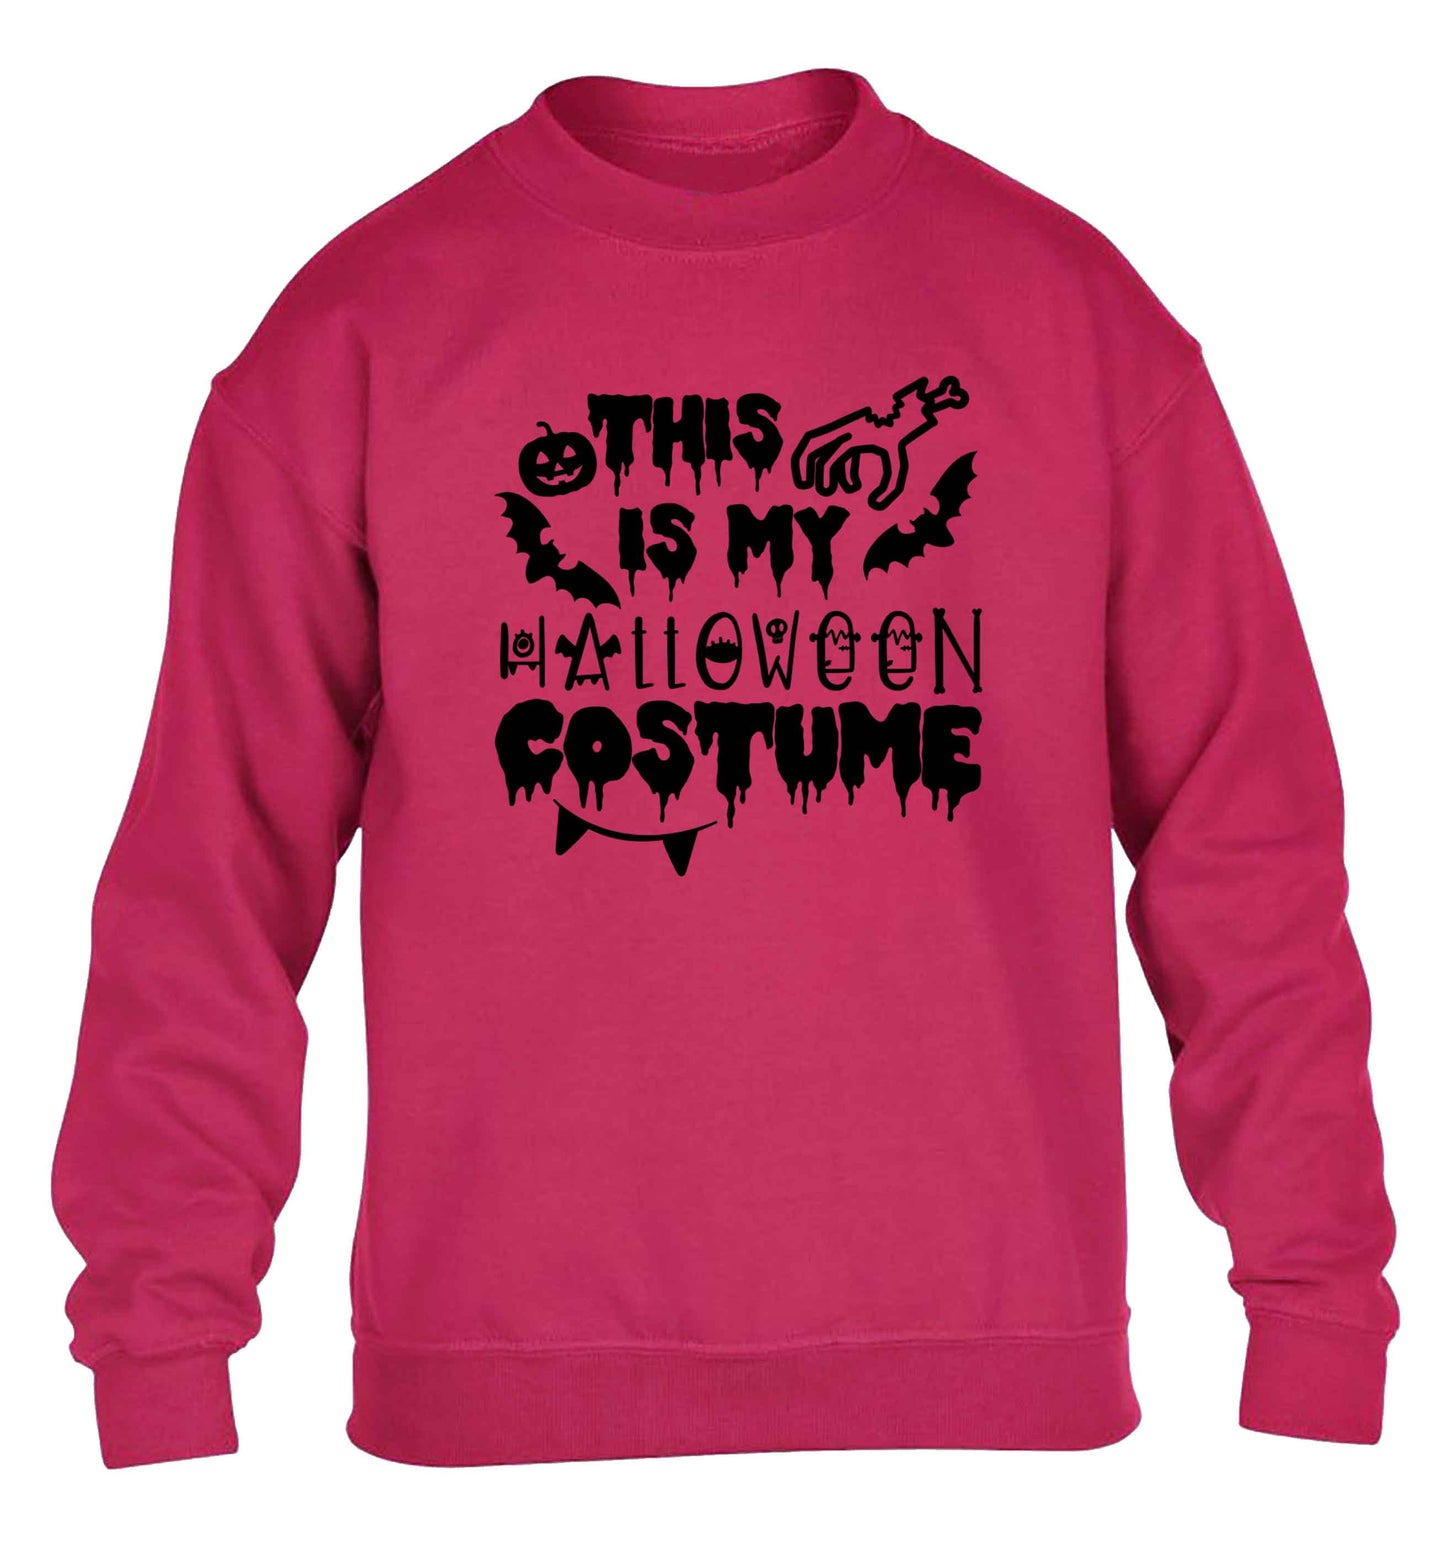 This is my halloween costume children's pink sweater 12-13 Years